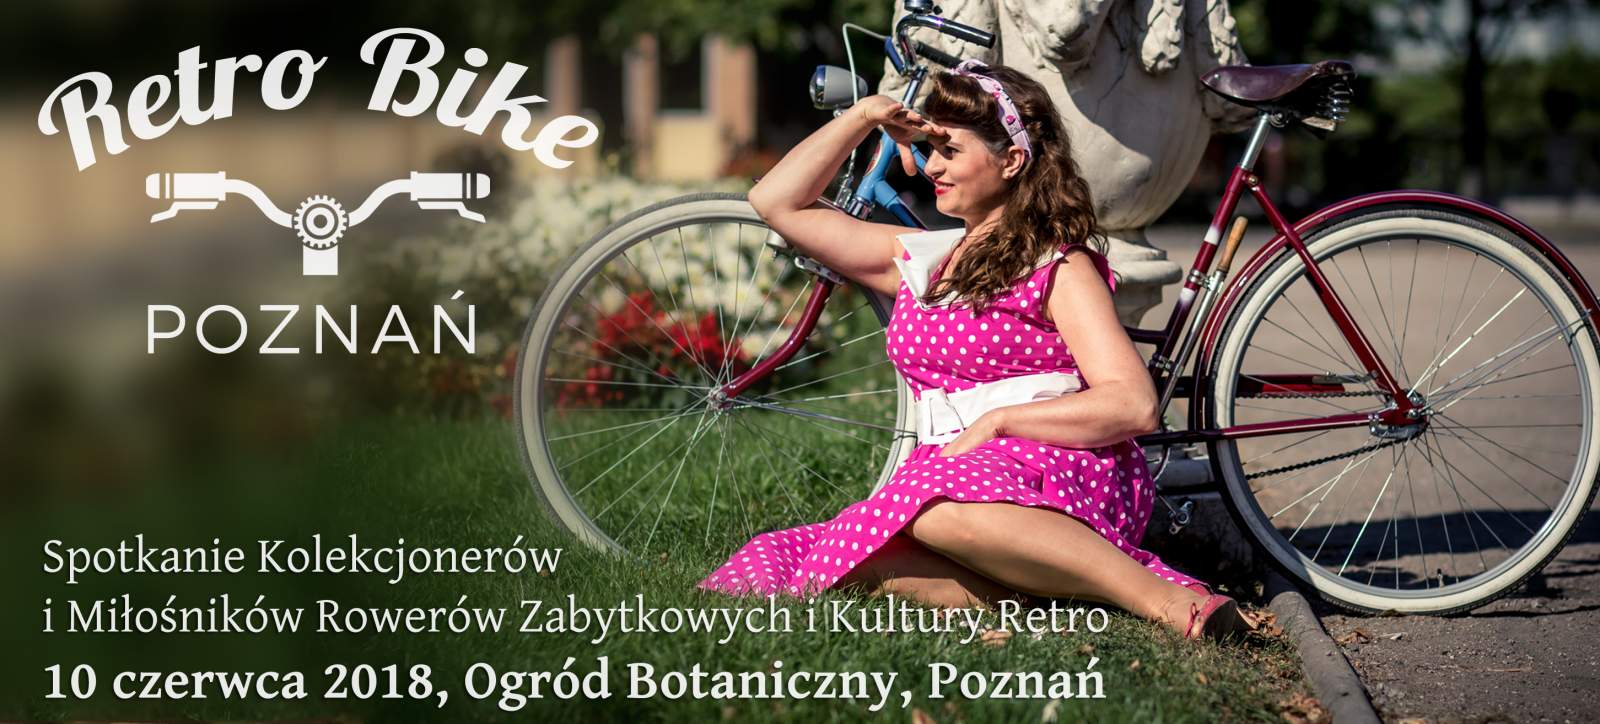 Retro Bike Poznań